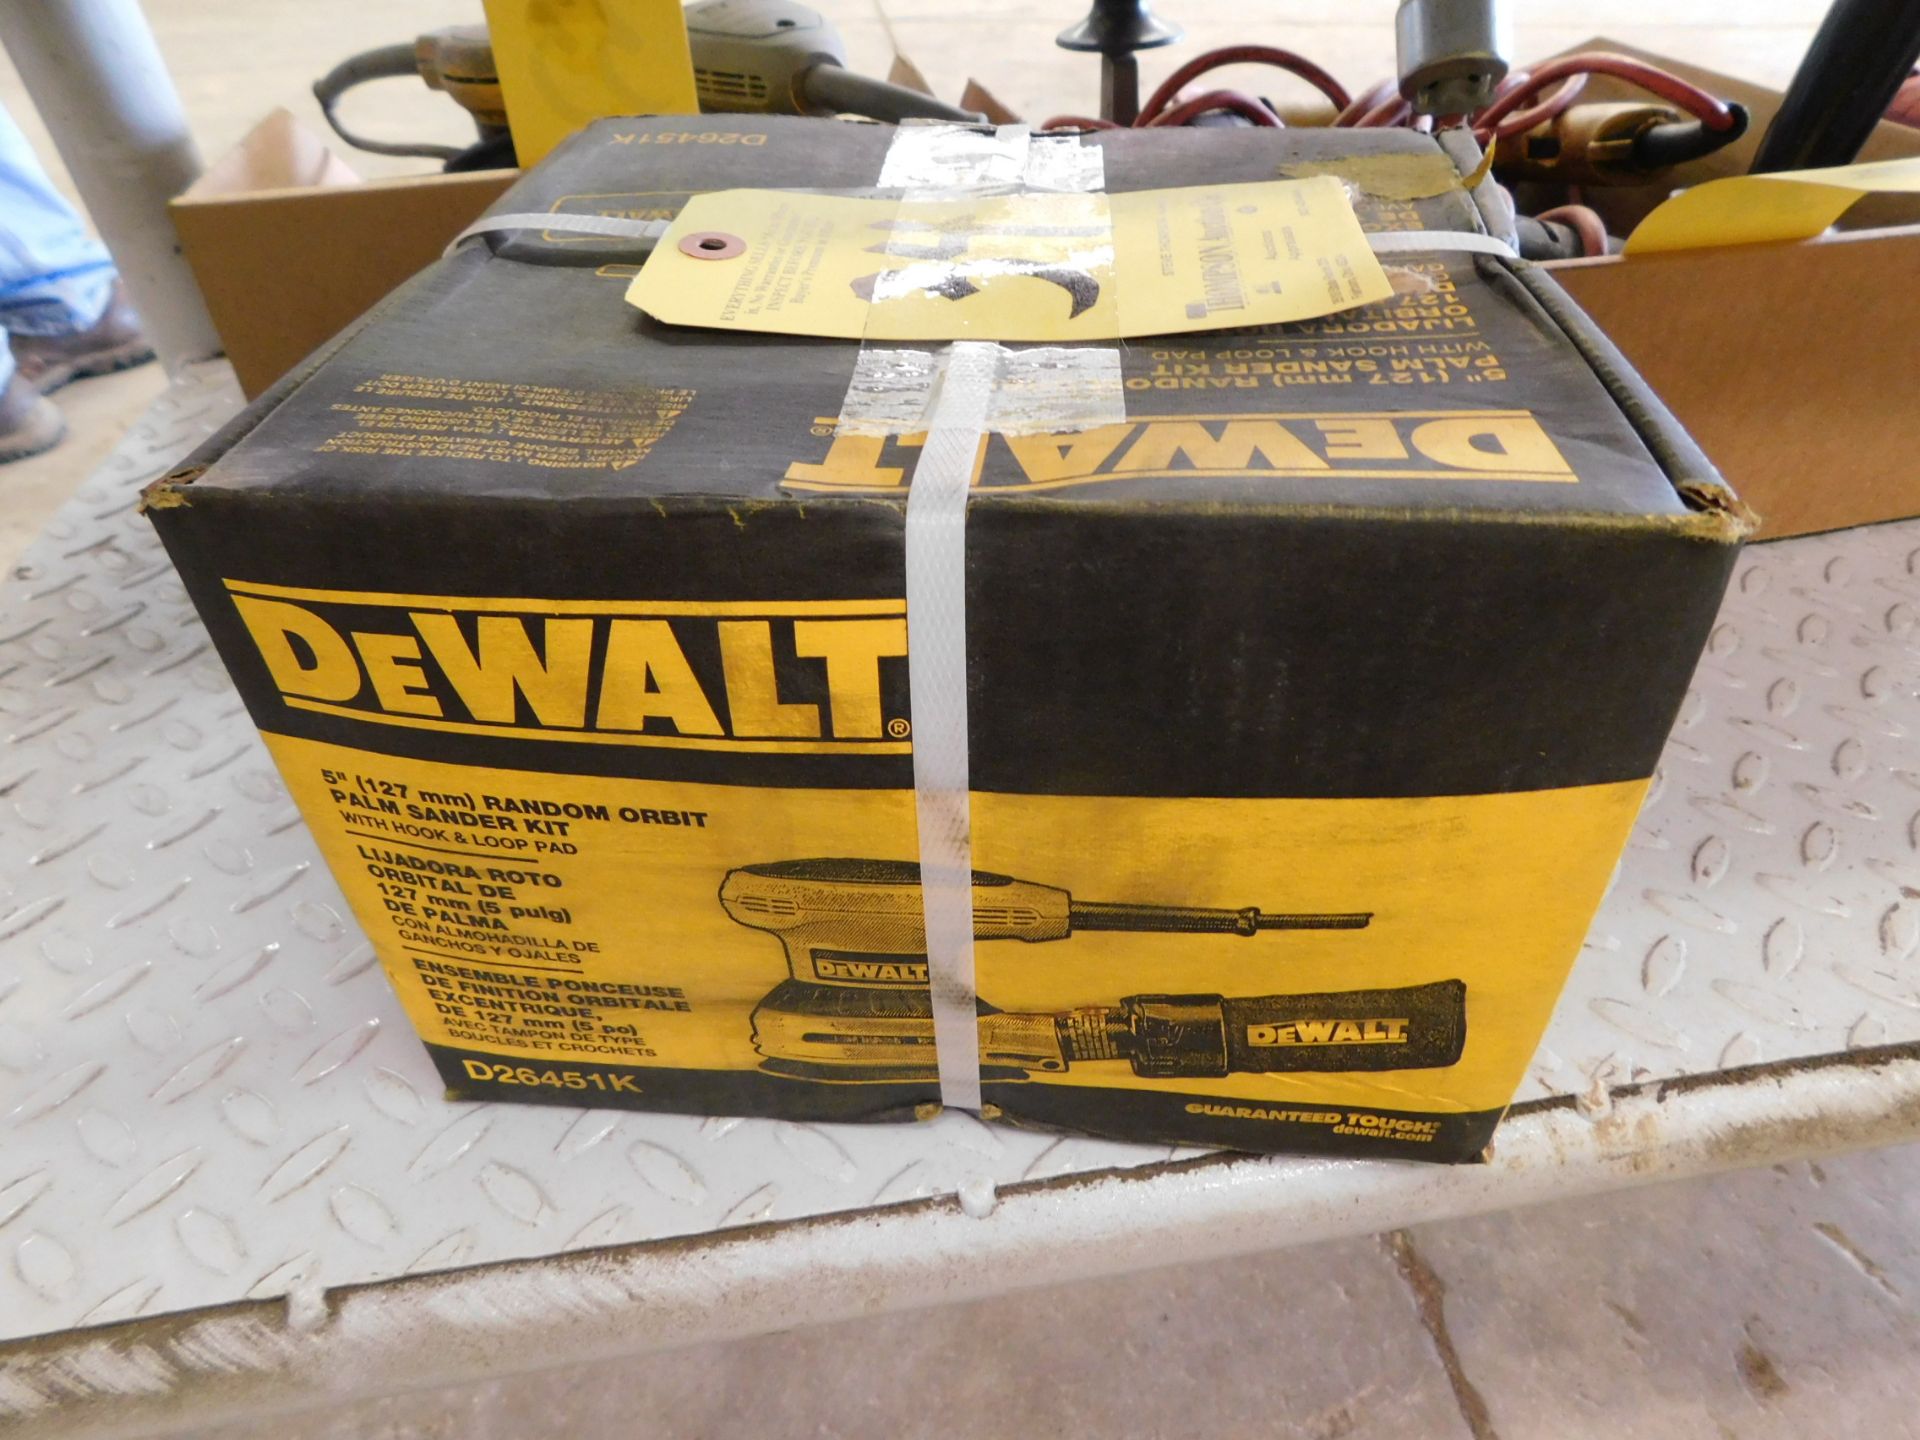 DeWalt D26451k Palm Sander (NEW in Box)